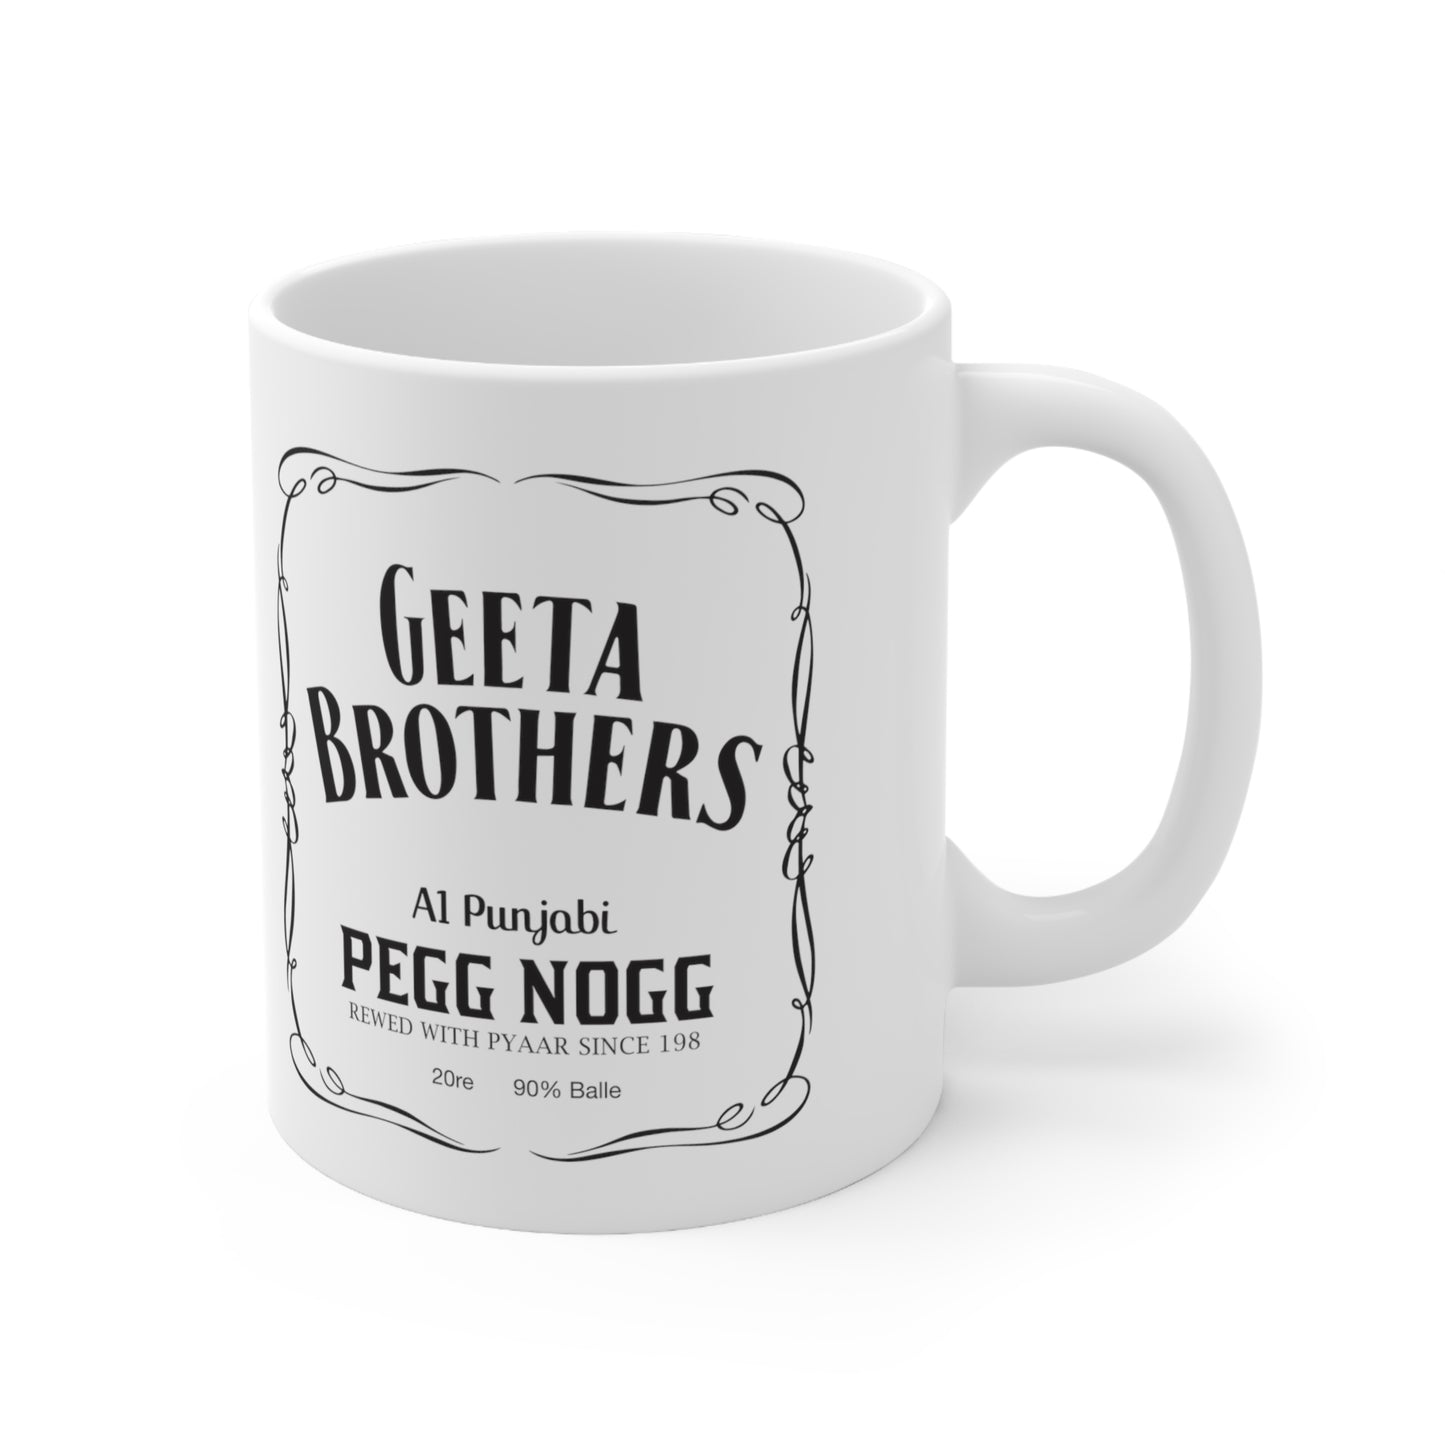 Pegg Nogg Mug